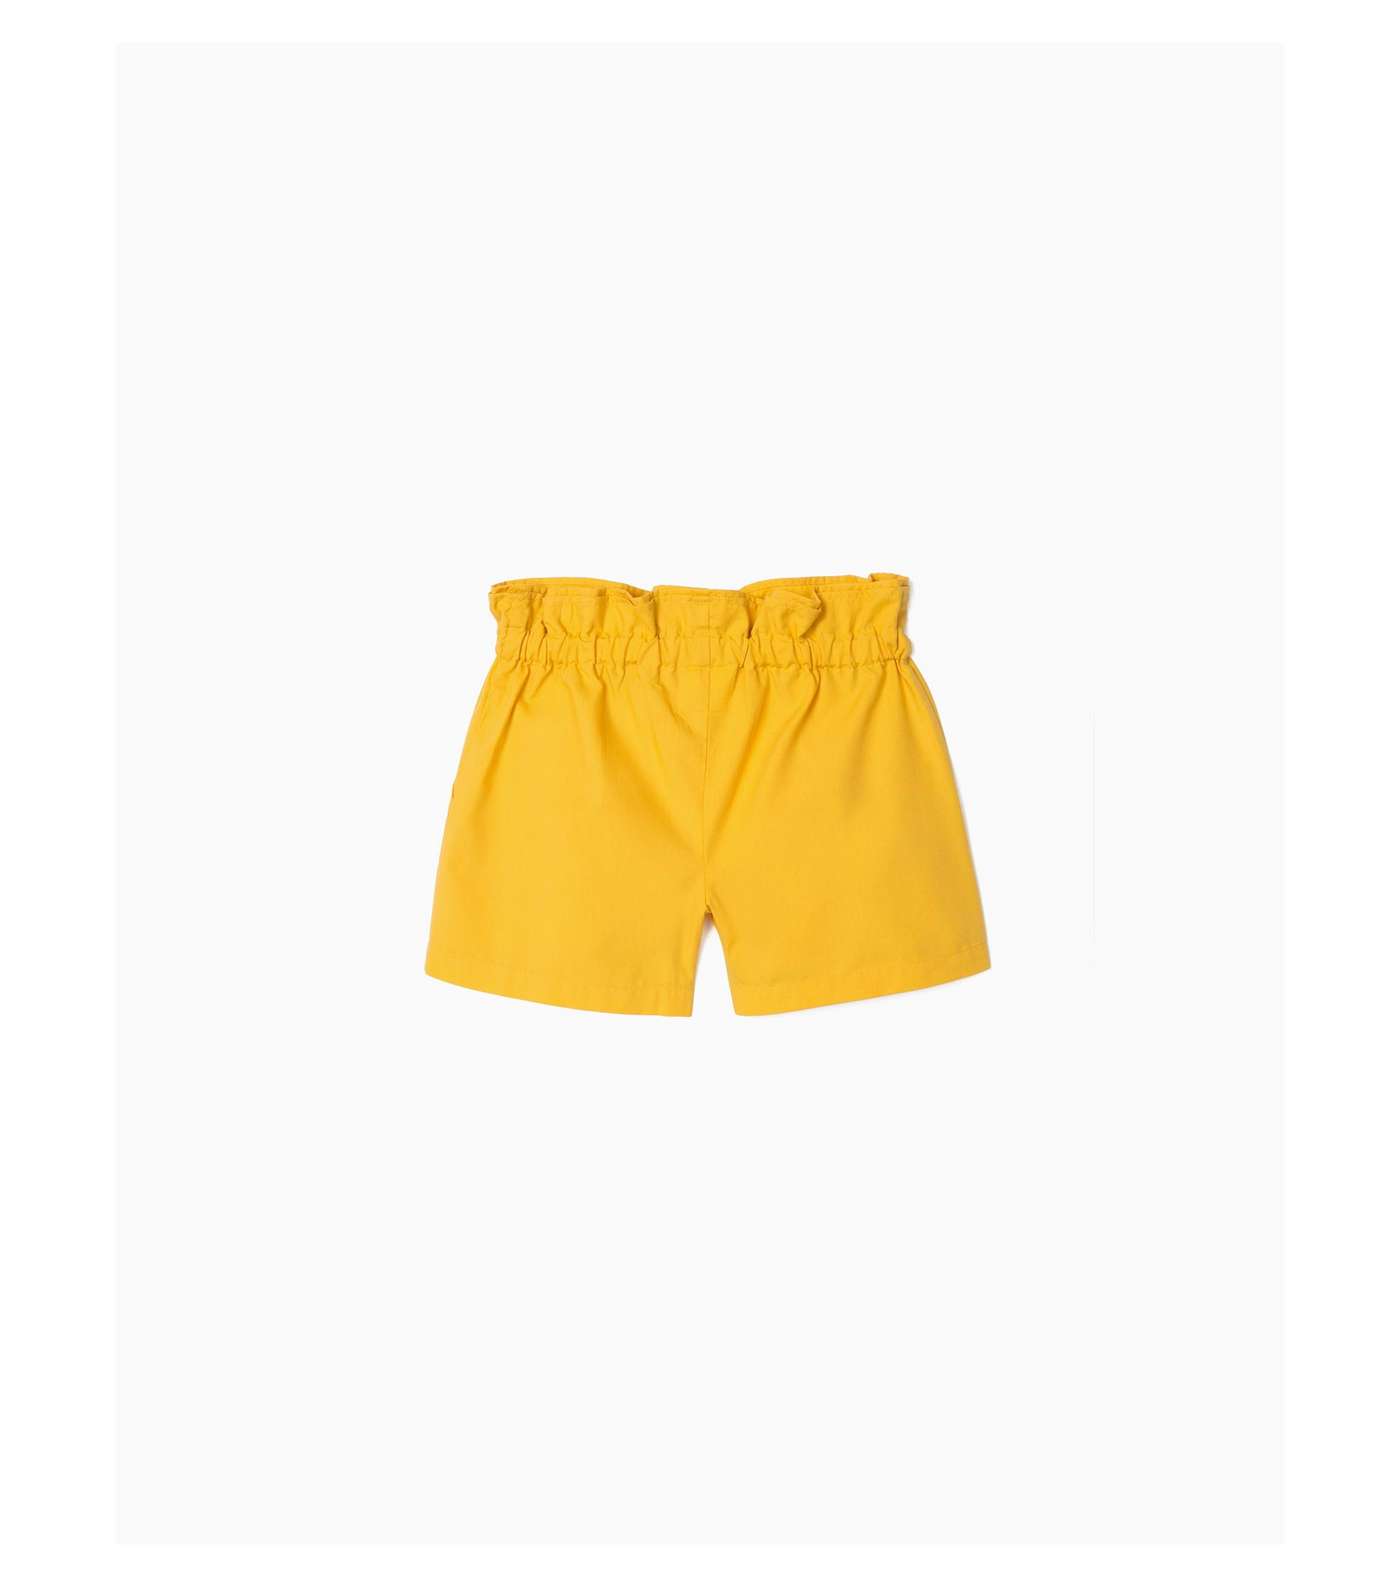 Zippy Yellow Paperbag Shorts Image 2